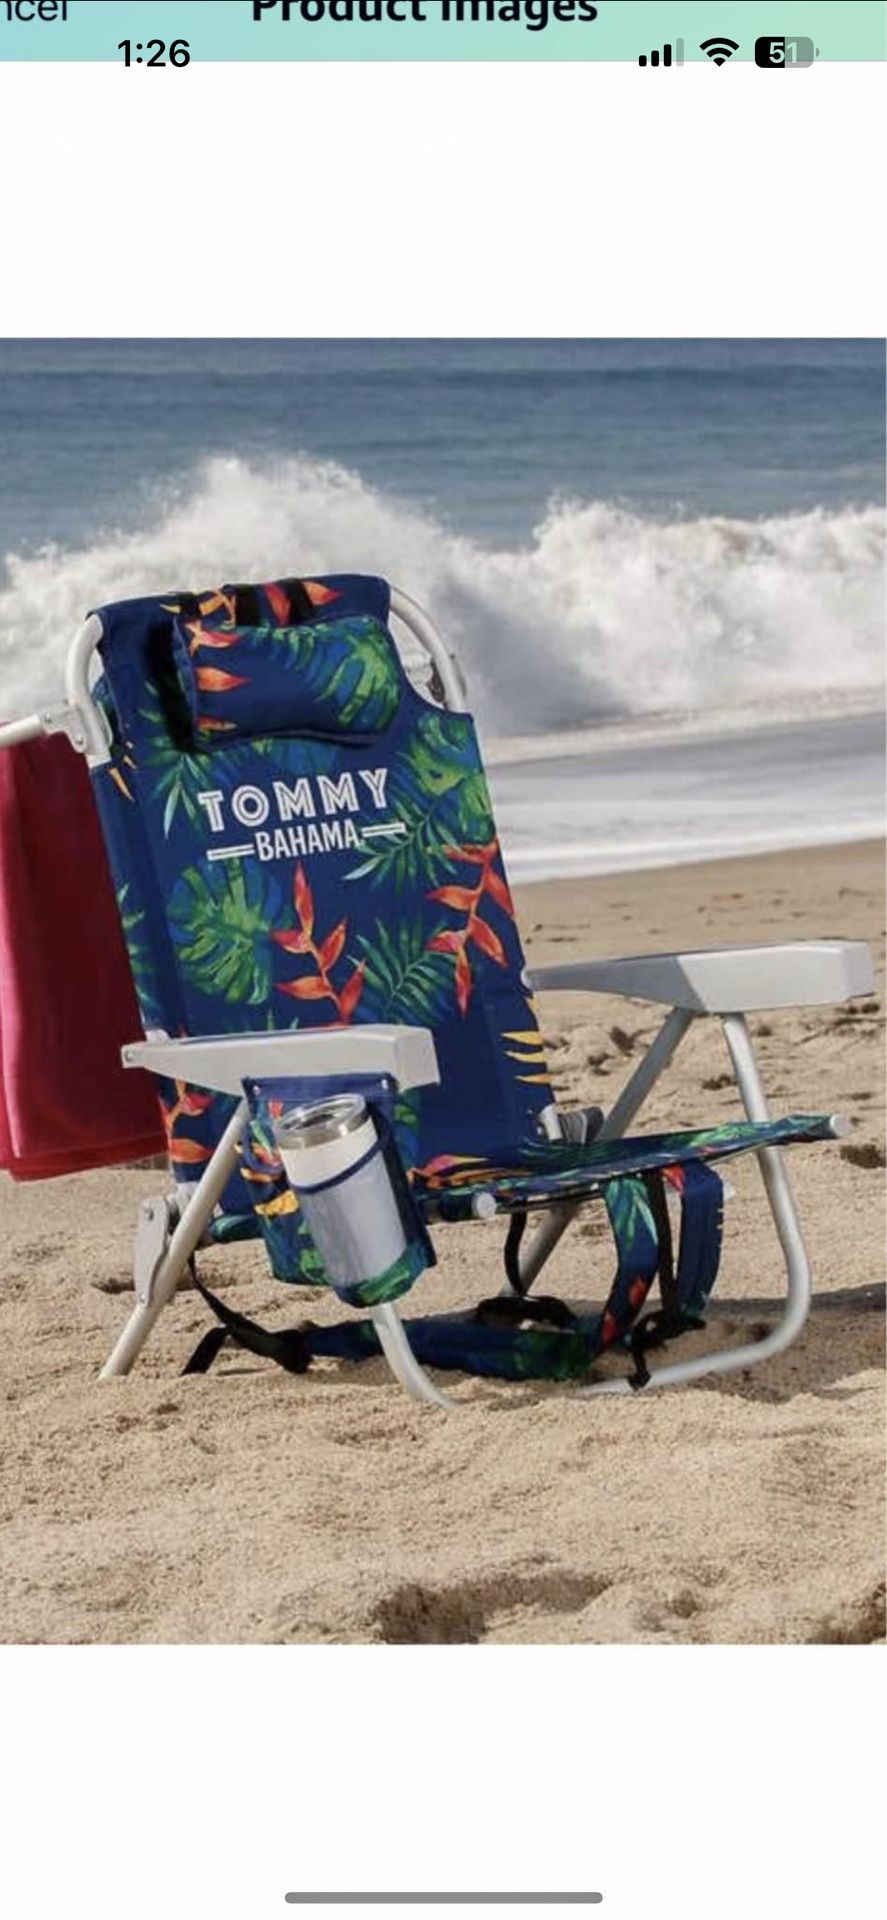 Tommy Bahama backpack beach chair